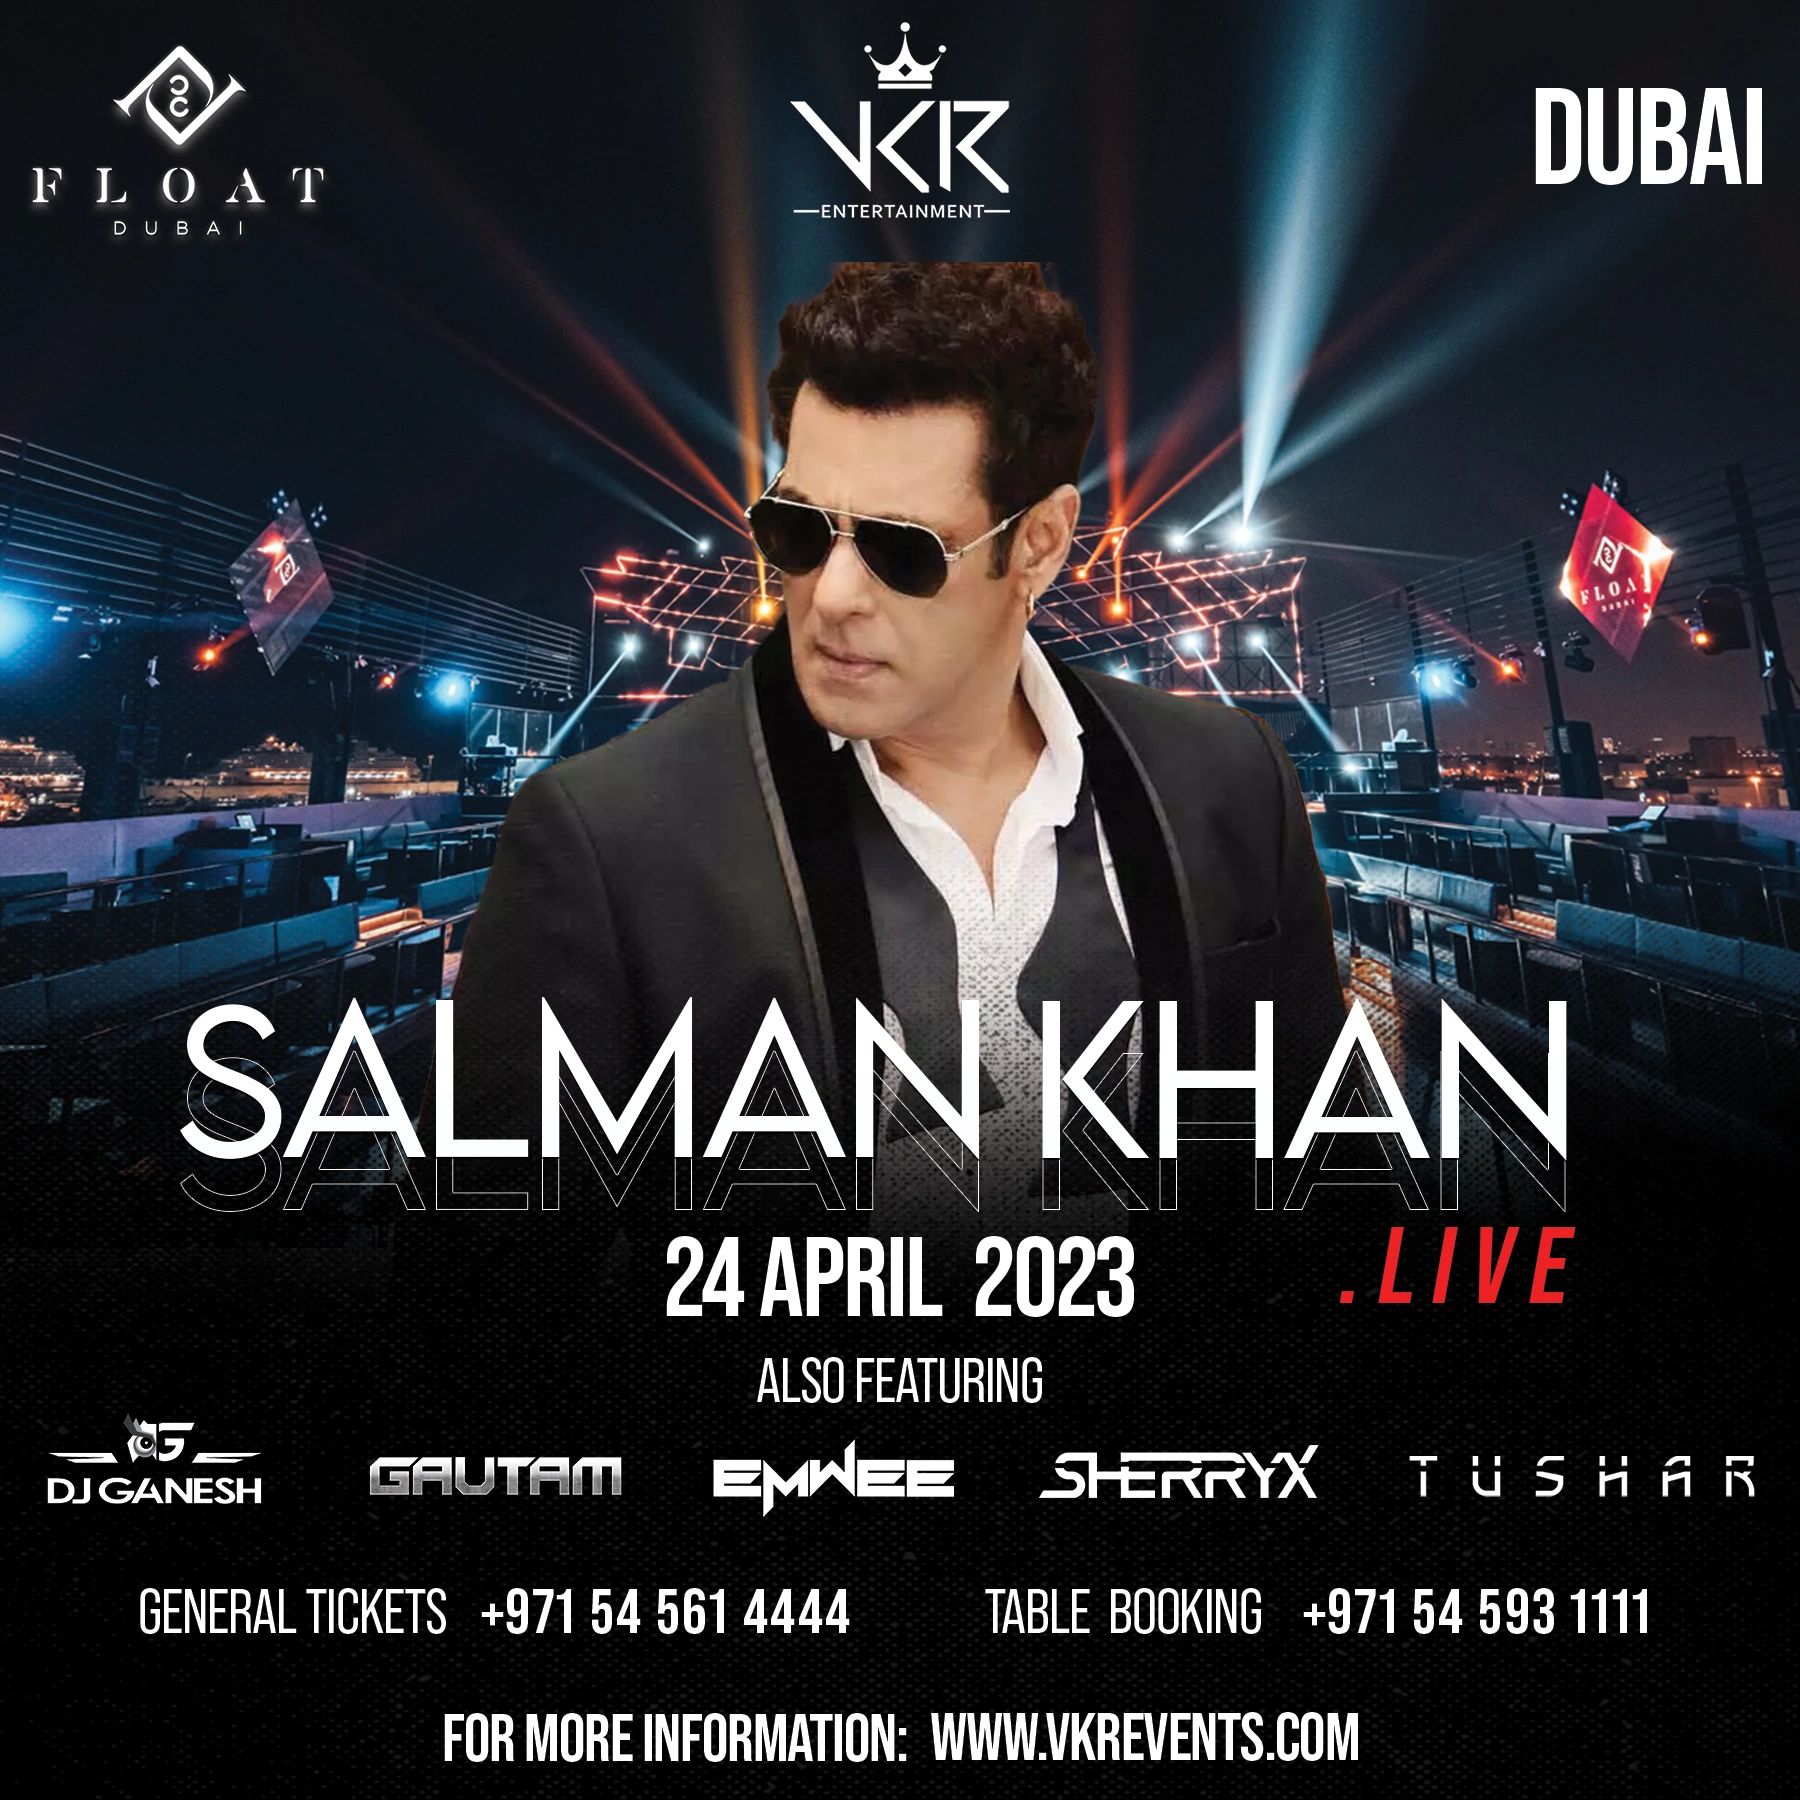 Salman Khan in Float Dubai for the VKR Experience